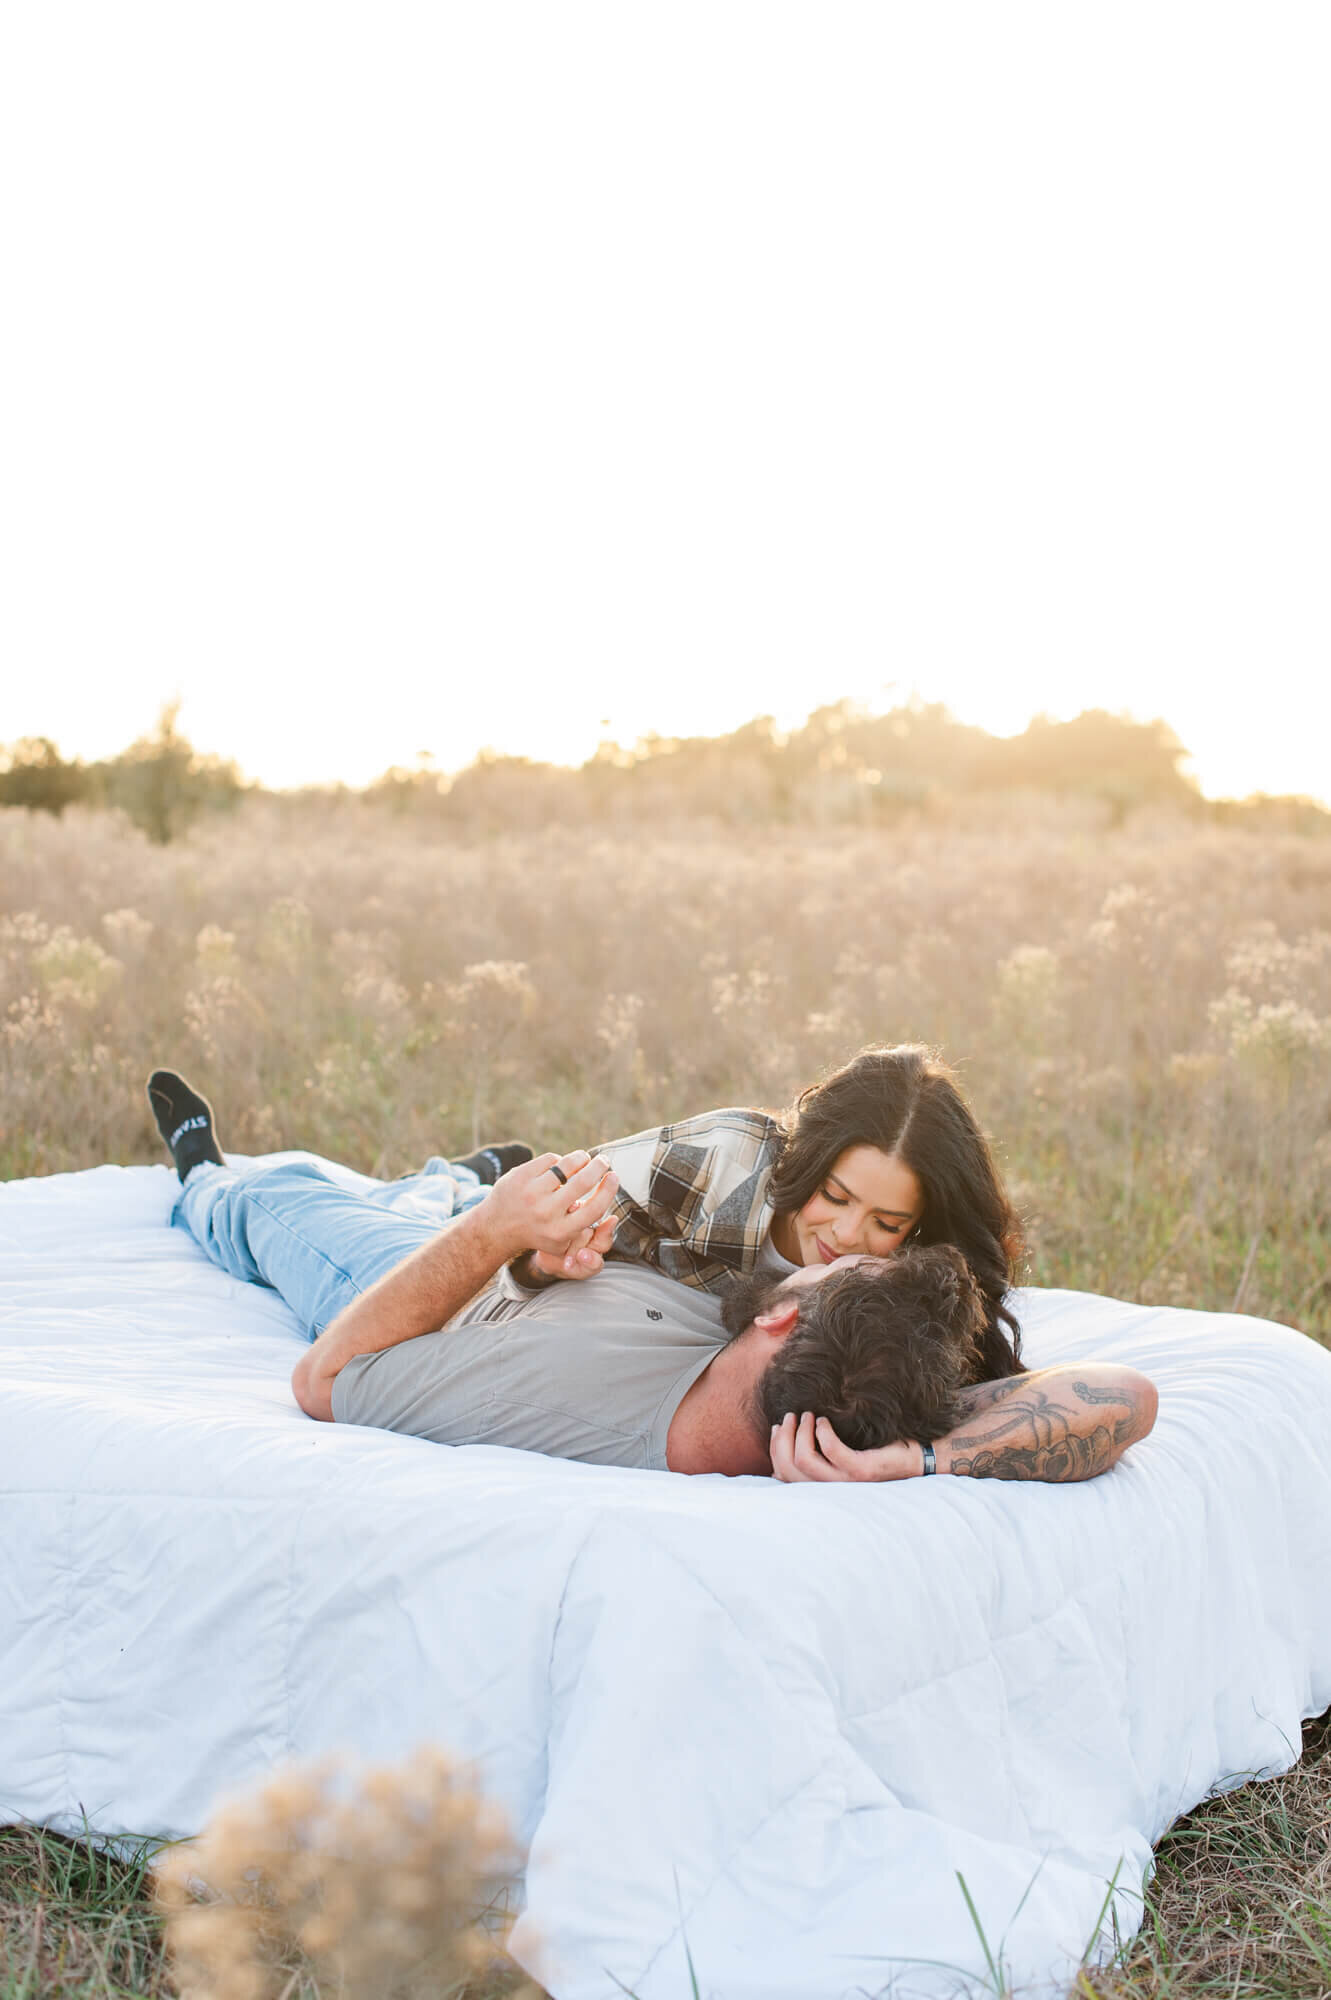 Orlando couple lays on an air mattress cuddling in a tall grass field